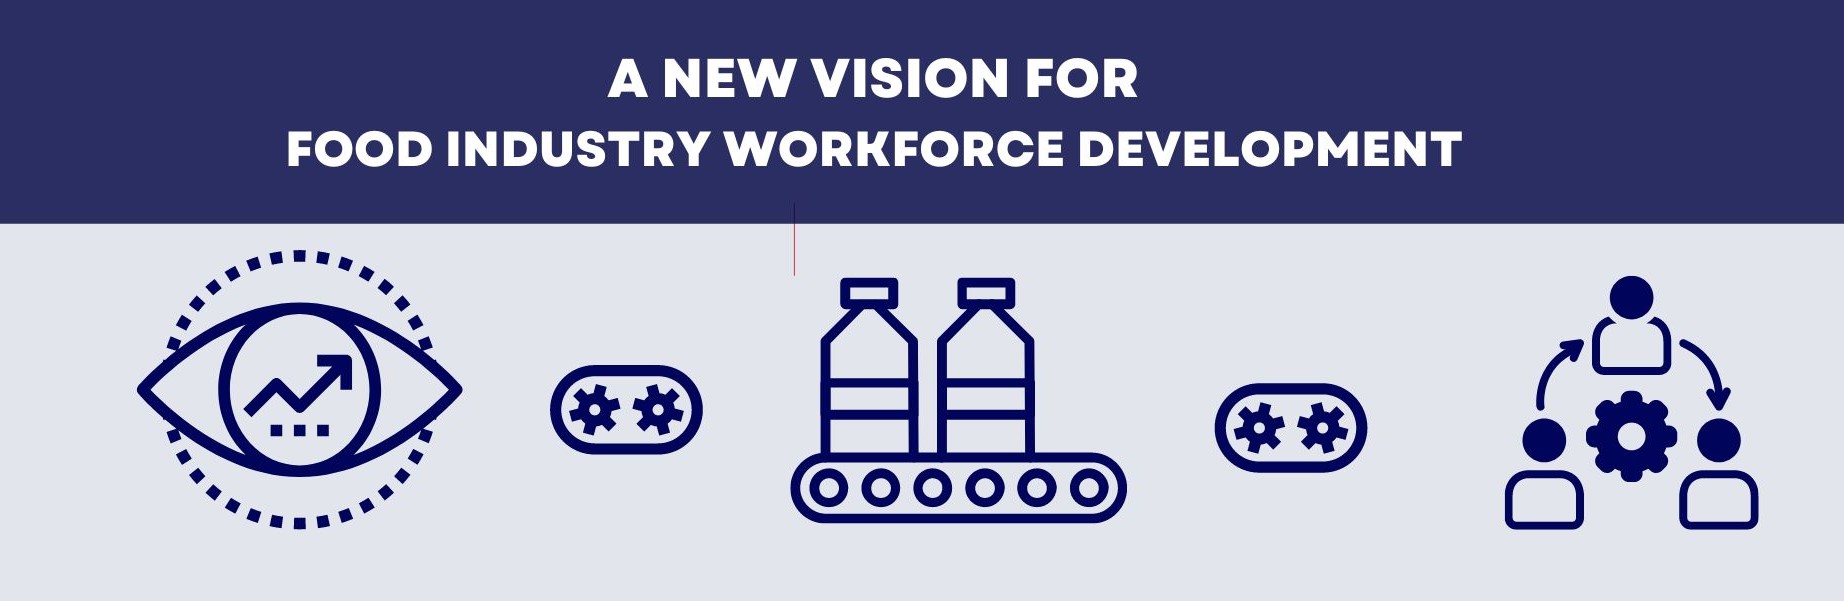 A new vision for Food Industry Workforce Development Program . Vision eye, manufacturing, workforce